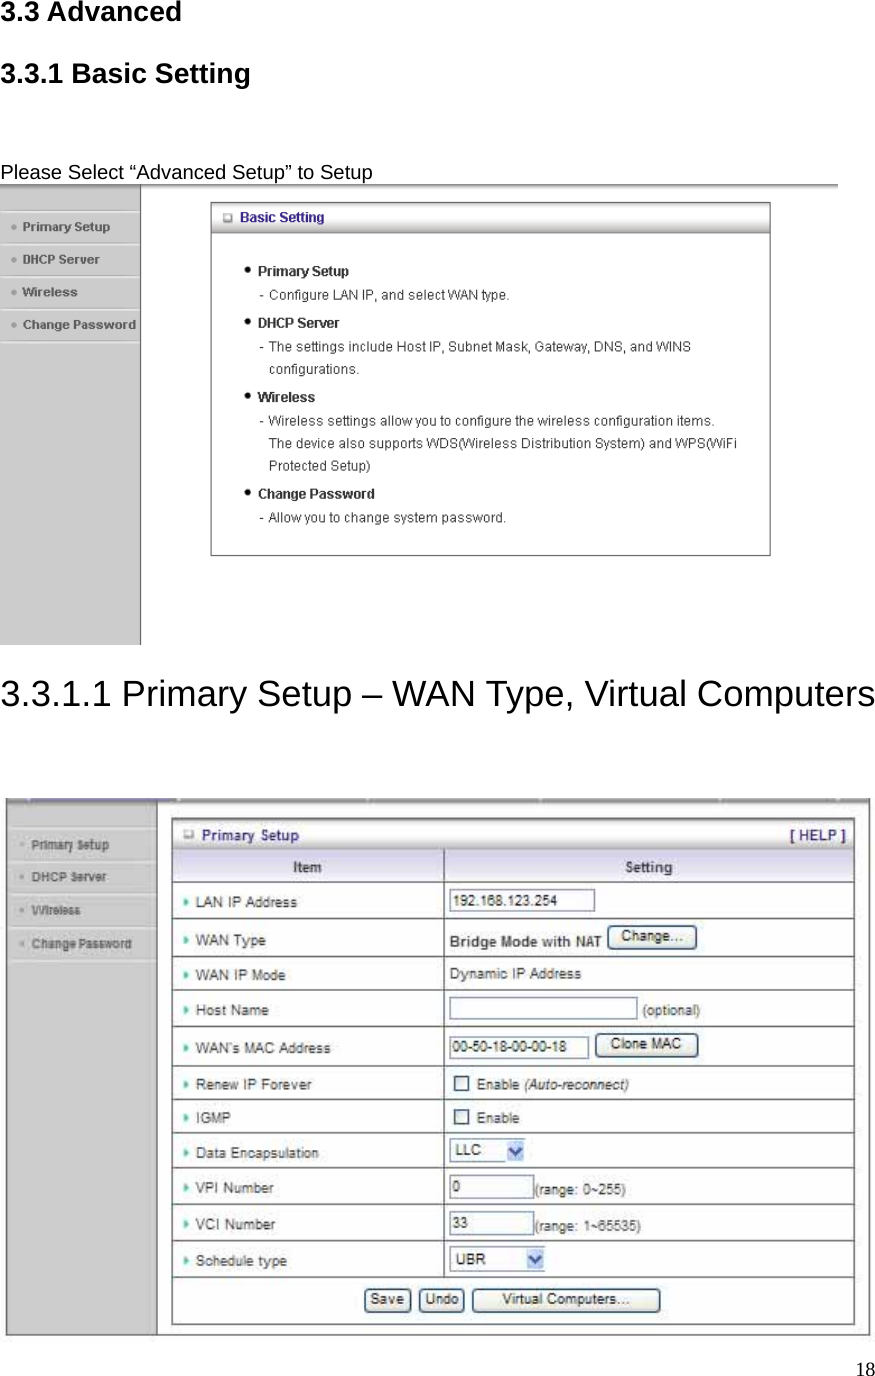  183.3 Advanced  3.3.1 Basic Setting Please Select “Advanced Setup” to Setup   3.3.1.1 Primary Setup – WAN Type, Virtual Computers  